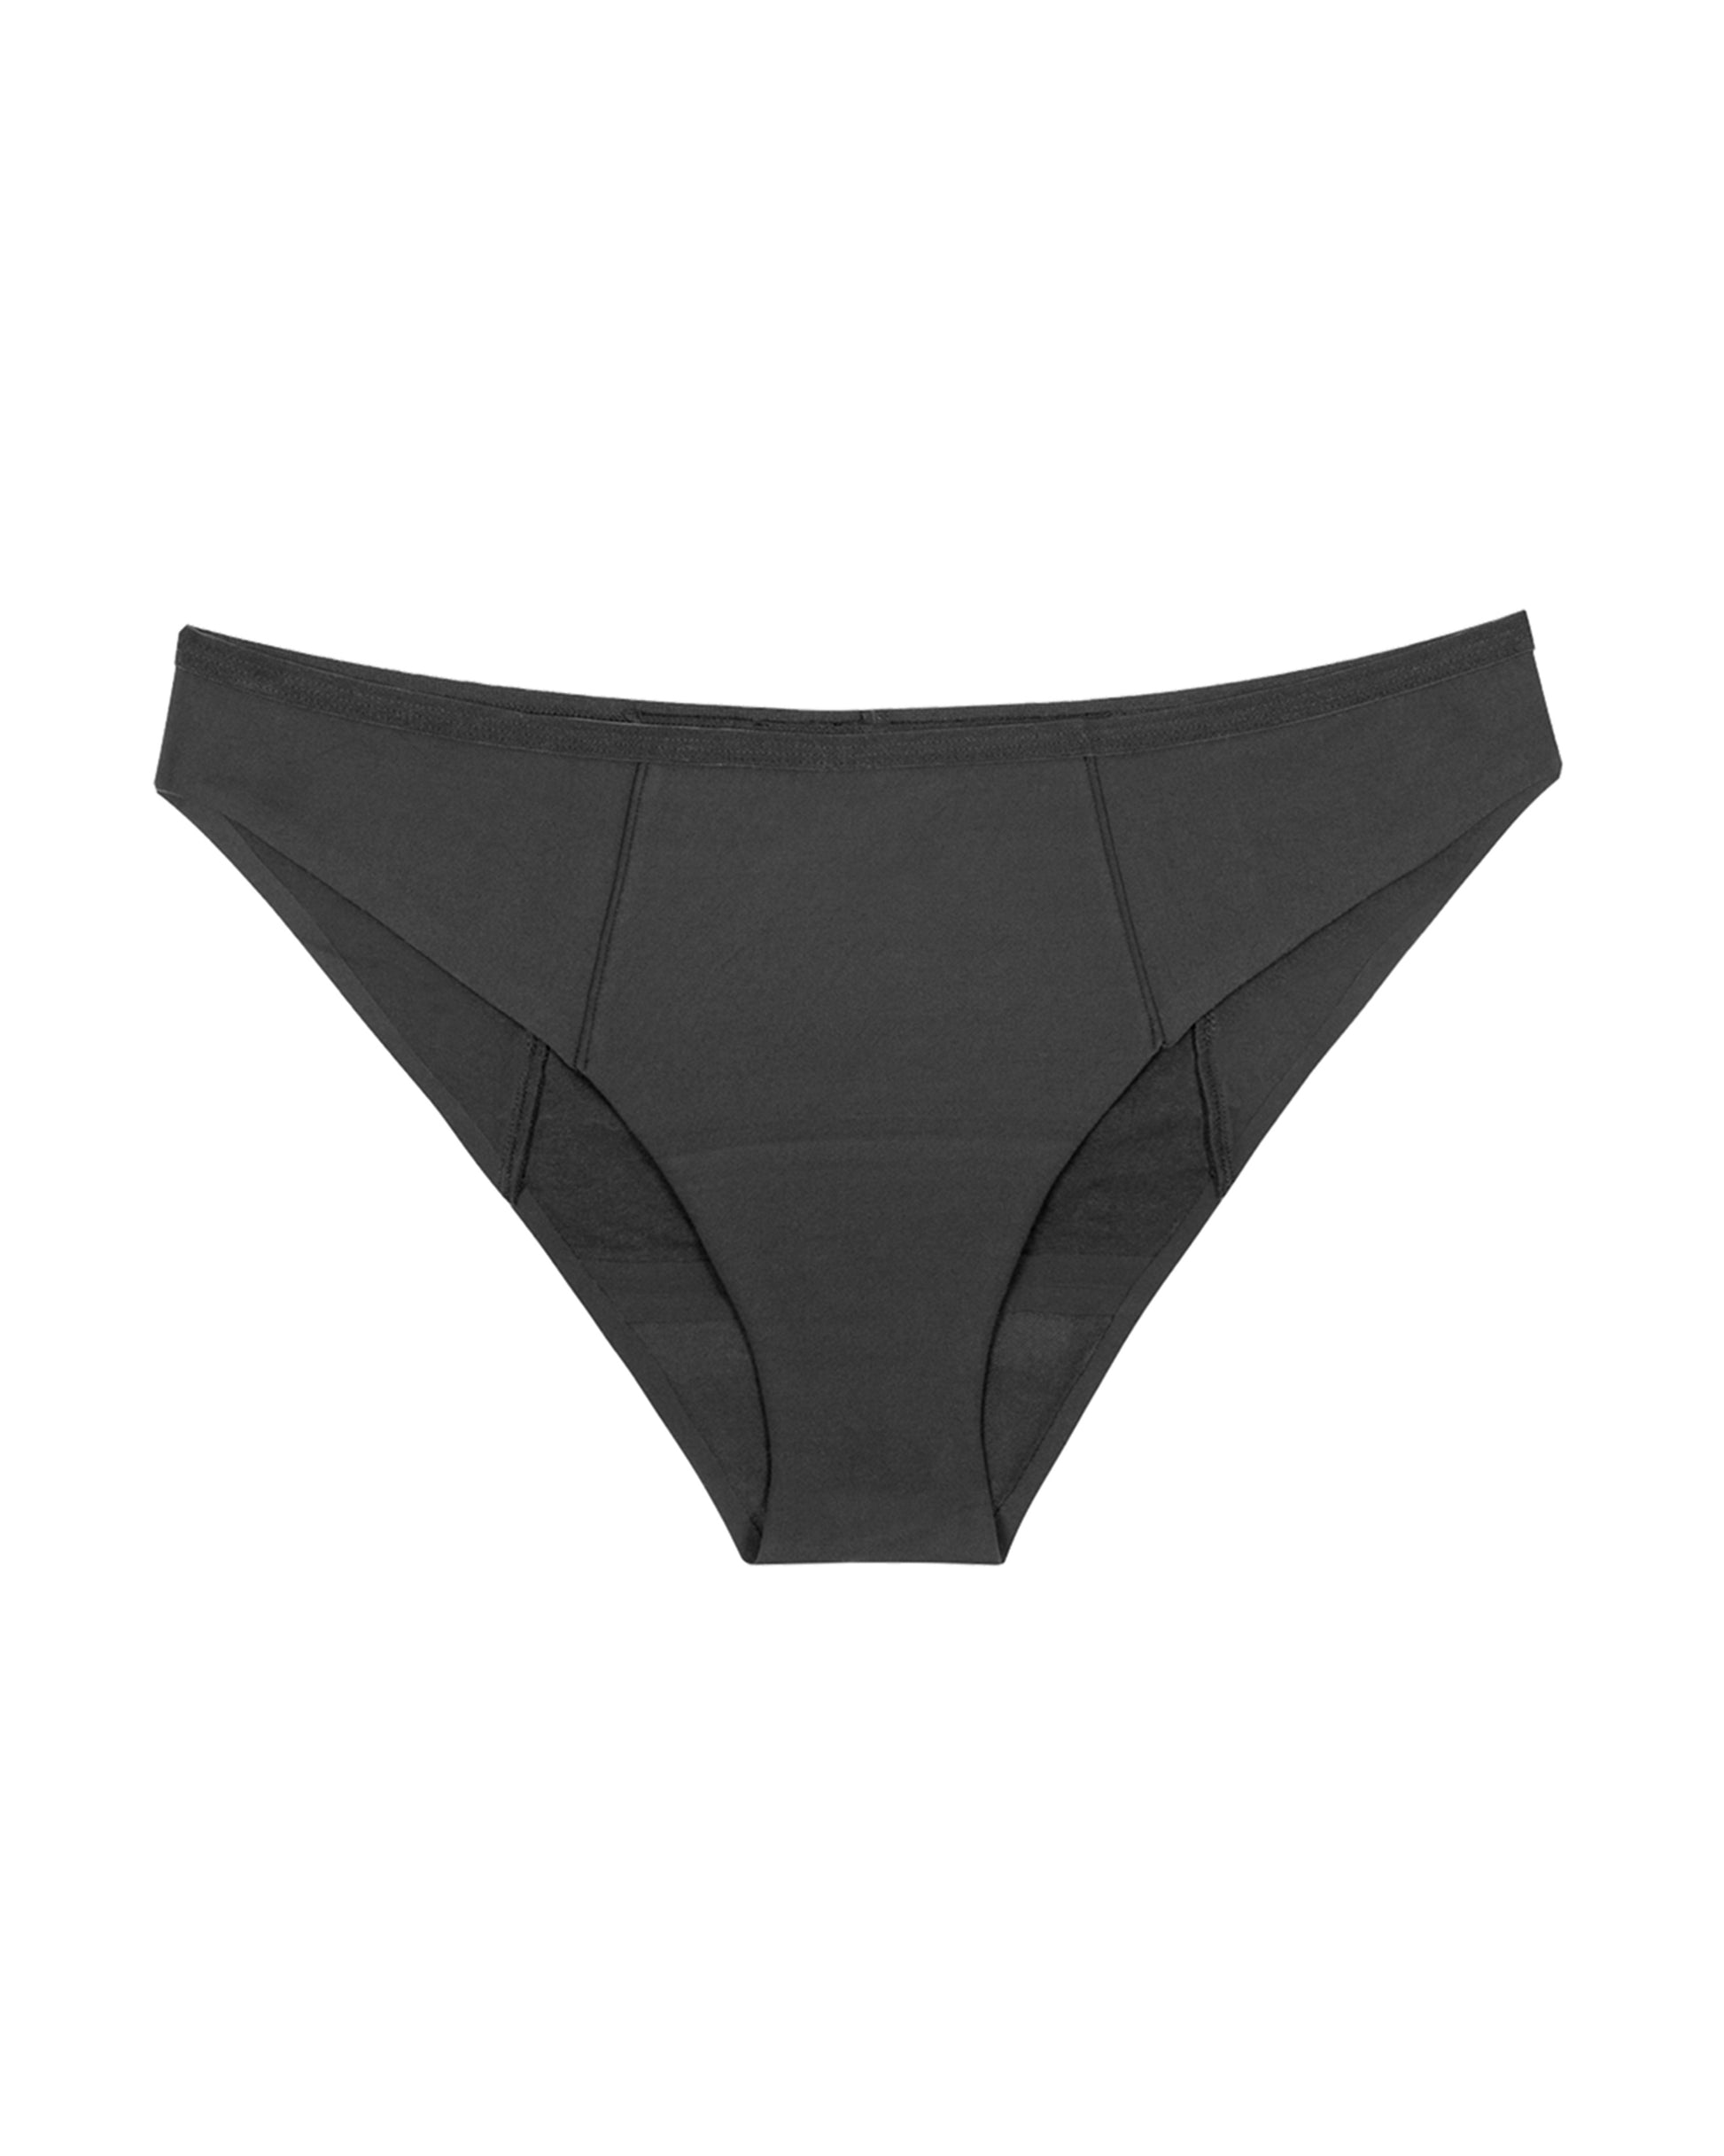 LEAKPROOF2.0 Sport Bikini Period Underwear for Women | Period Panties Holds  4 Tampons | Mild Incontinence Leak Proof Underwear (L/XL, Black)